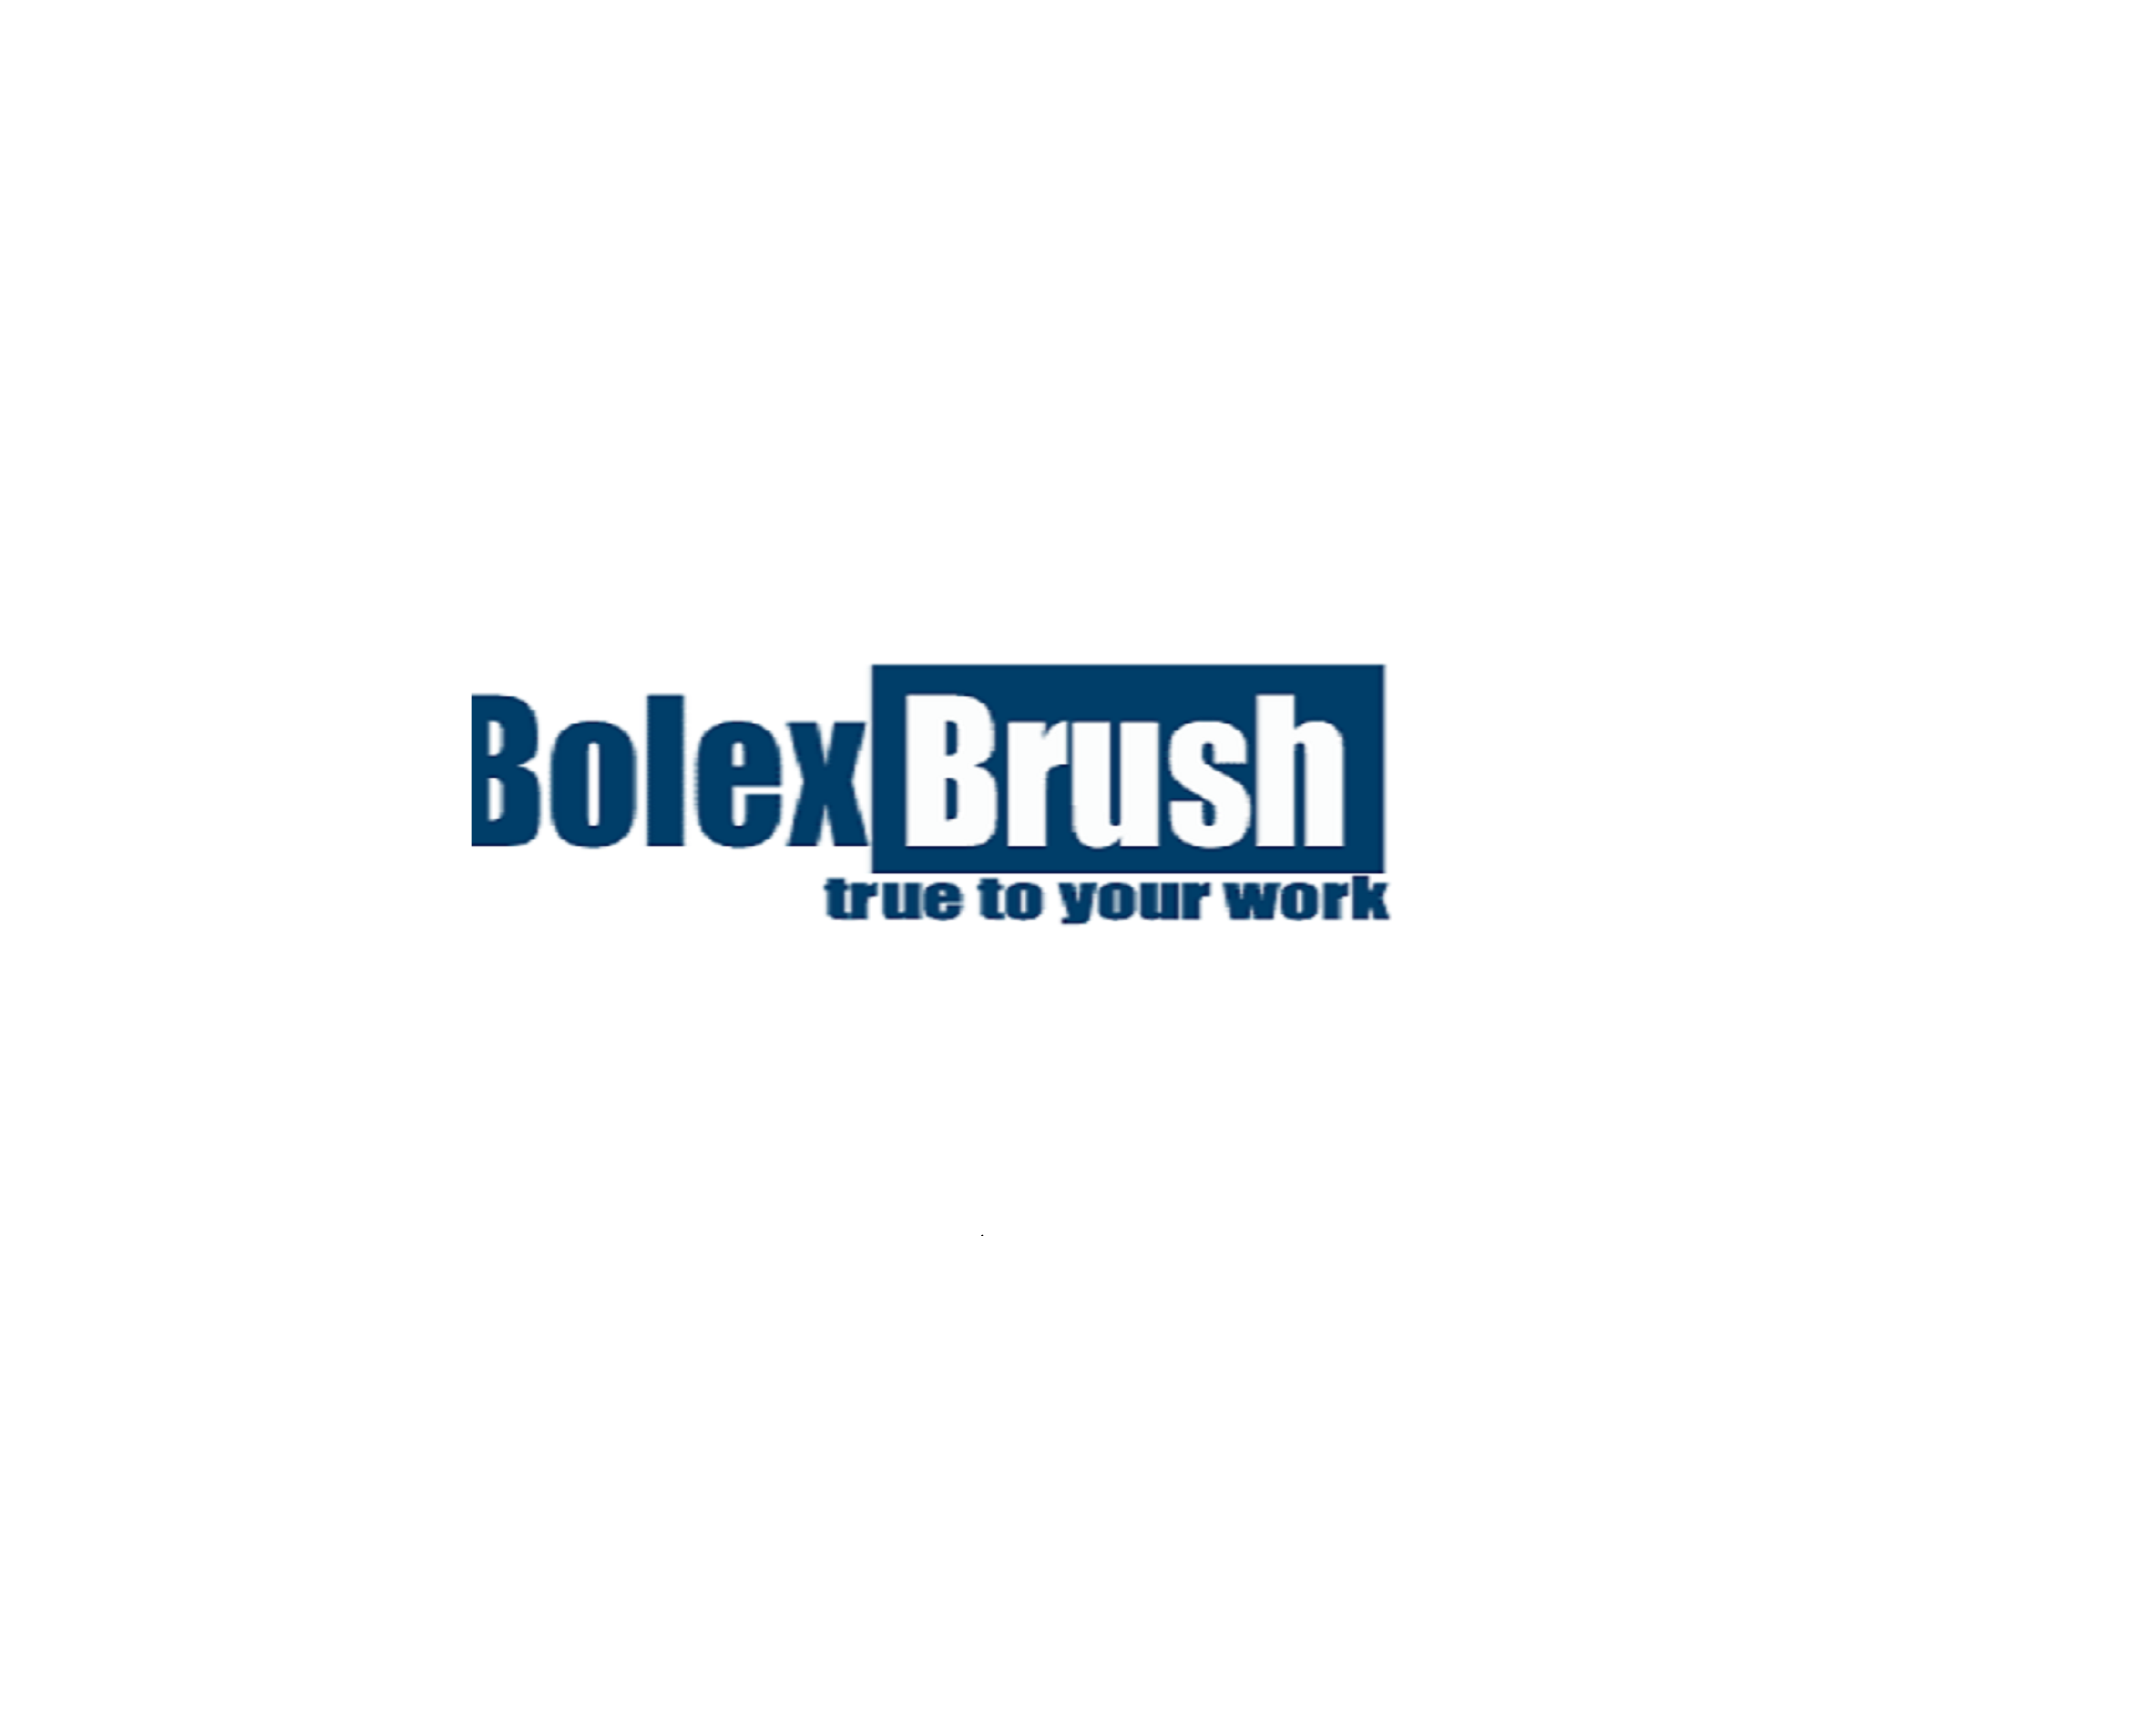 Bolex Industrial Brushes Co., Ltd